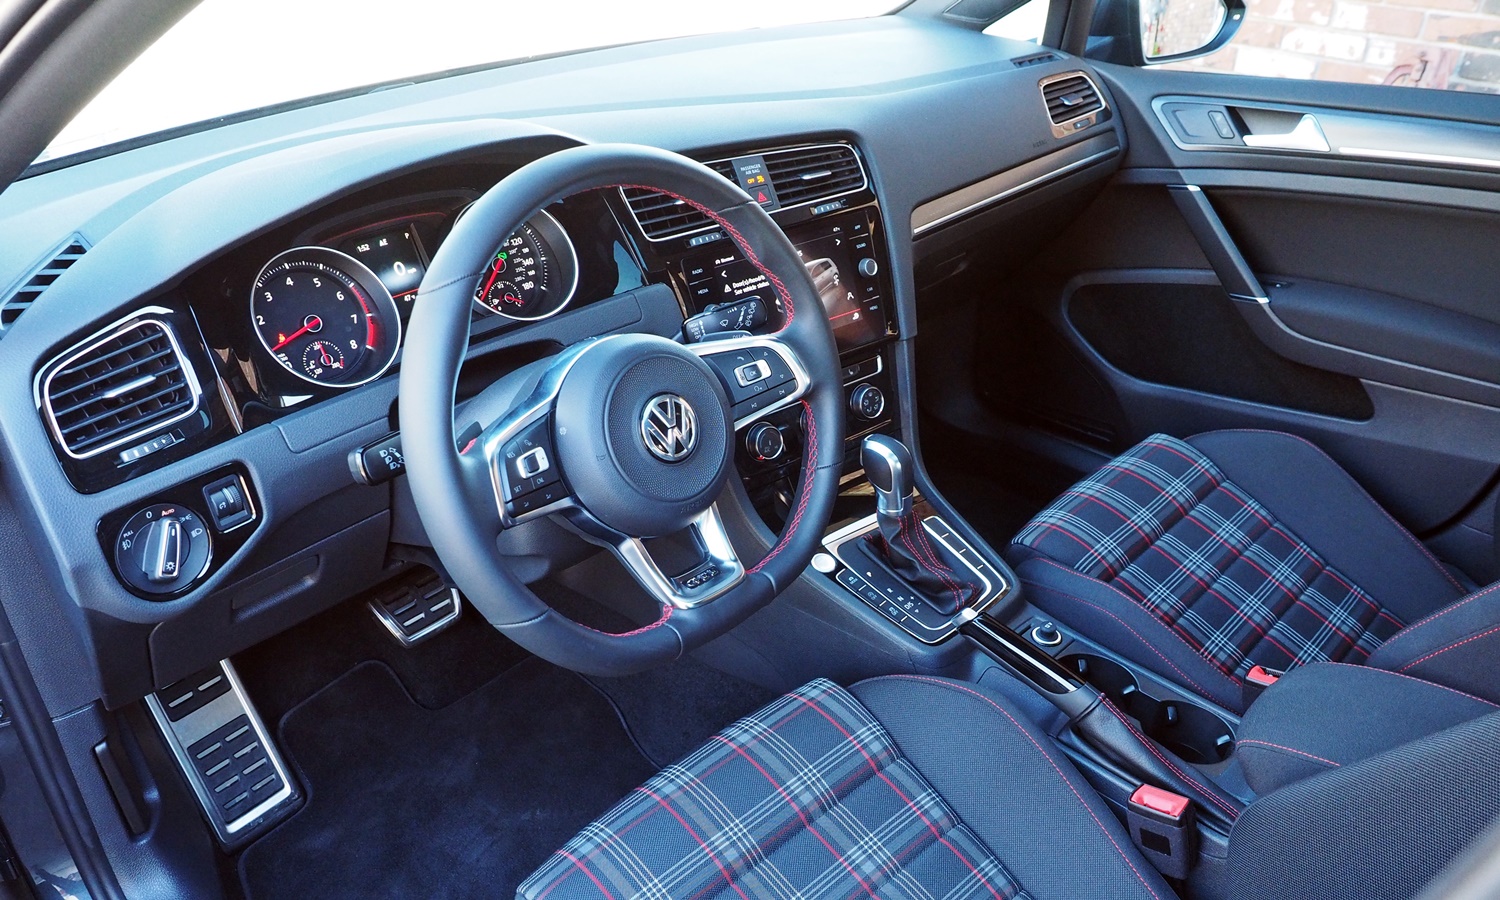 Hyundai Veloster Photos: VW GTI interior